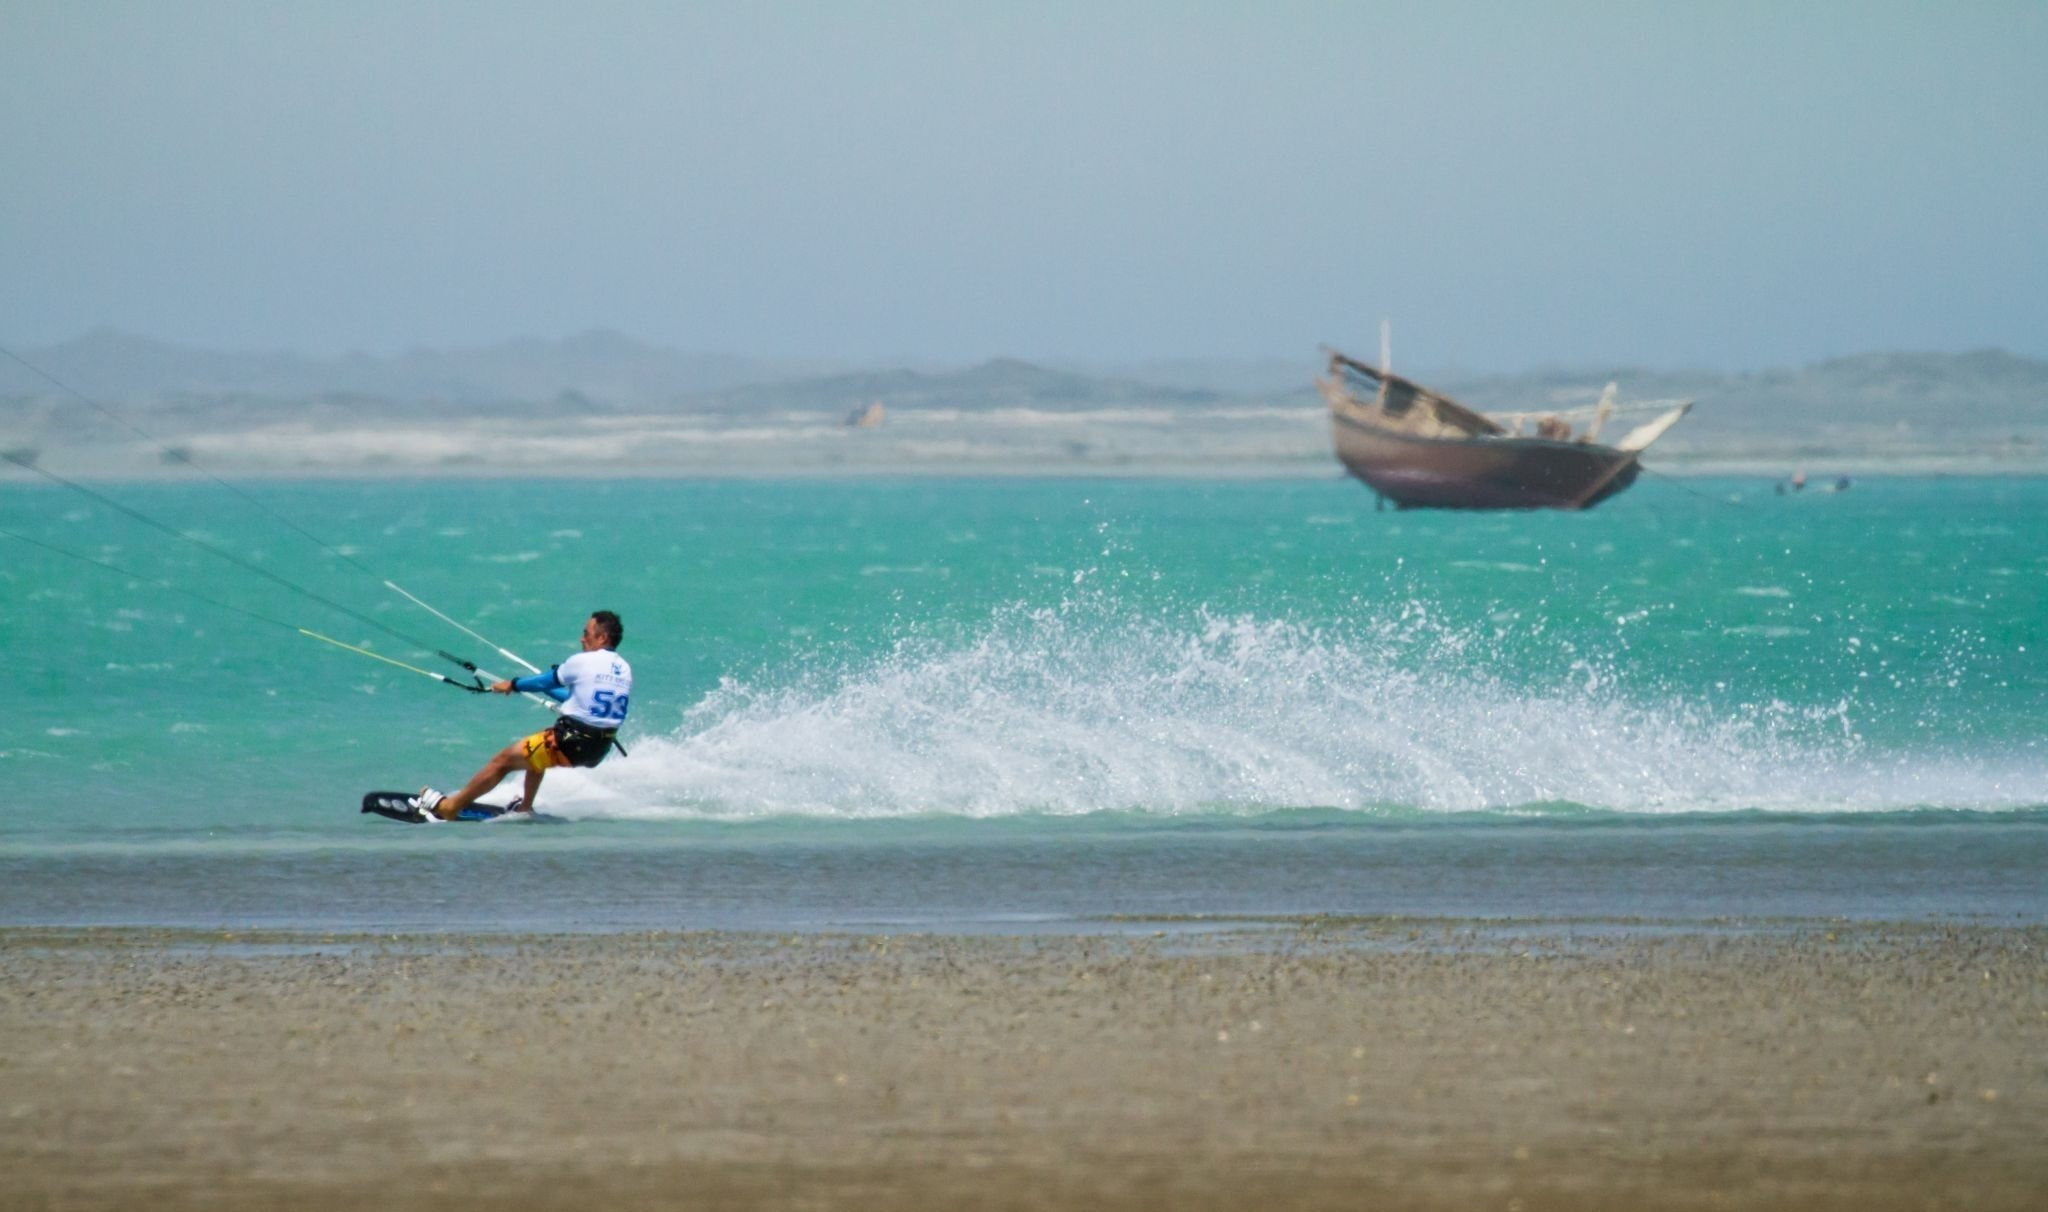 Kiteboarders praise organisation of World Championship event in Oman